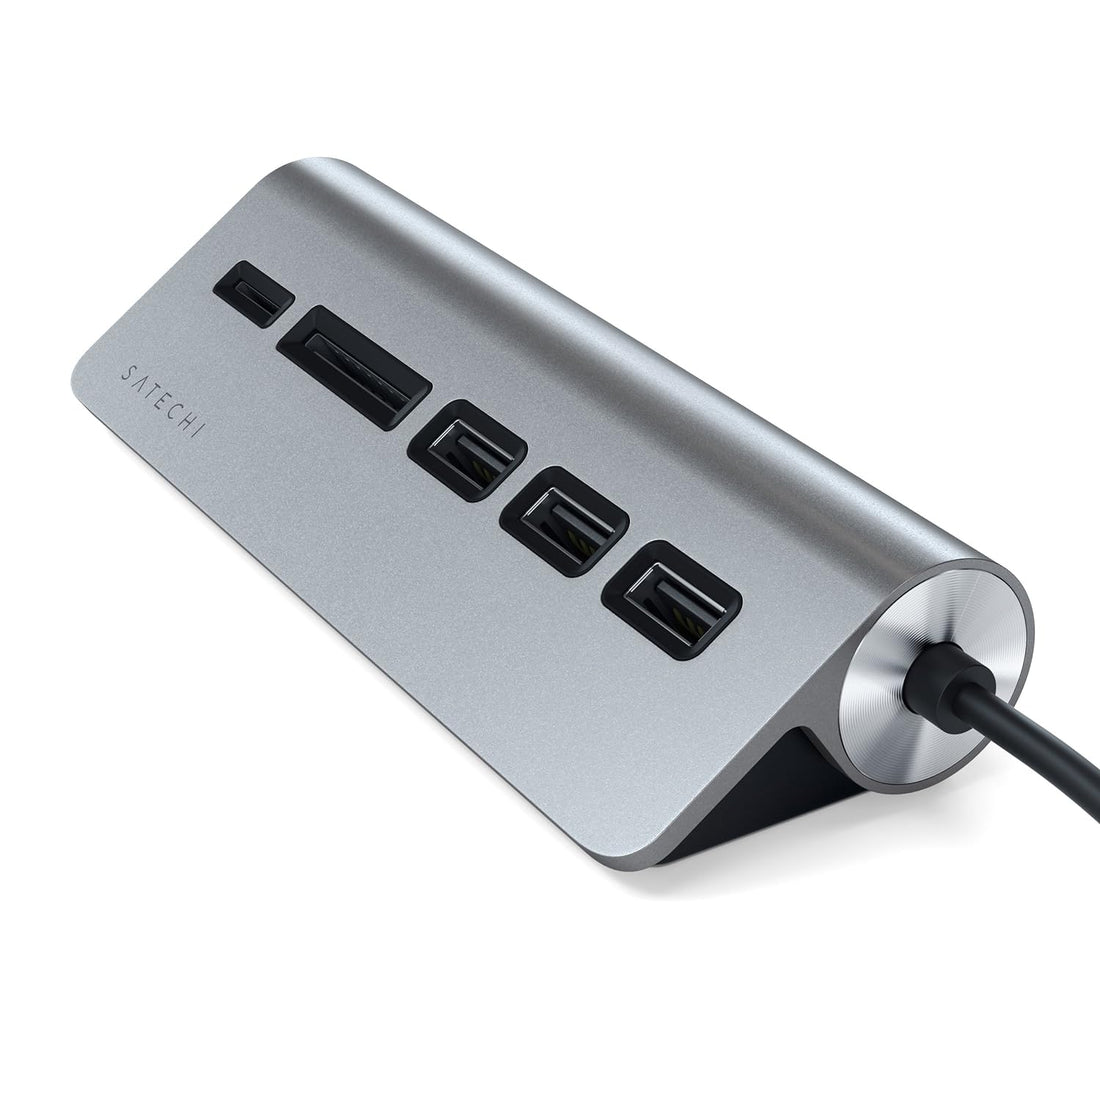 Satechi USB-C Combo Hub for Desktop - USB-A 3.0 Data Ports & Micro/SD Card Readers - for M2/ M1 MacBook Pro/Air, M2/ M1 iPad Pro/Air, M2 Mac Mini, iMac M1 (Space Gray)